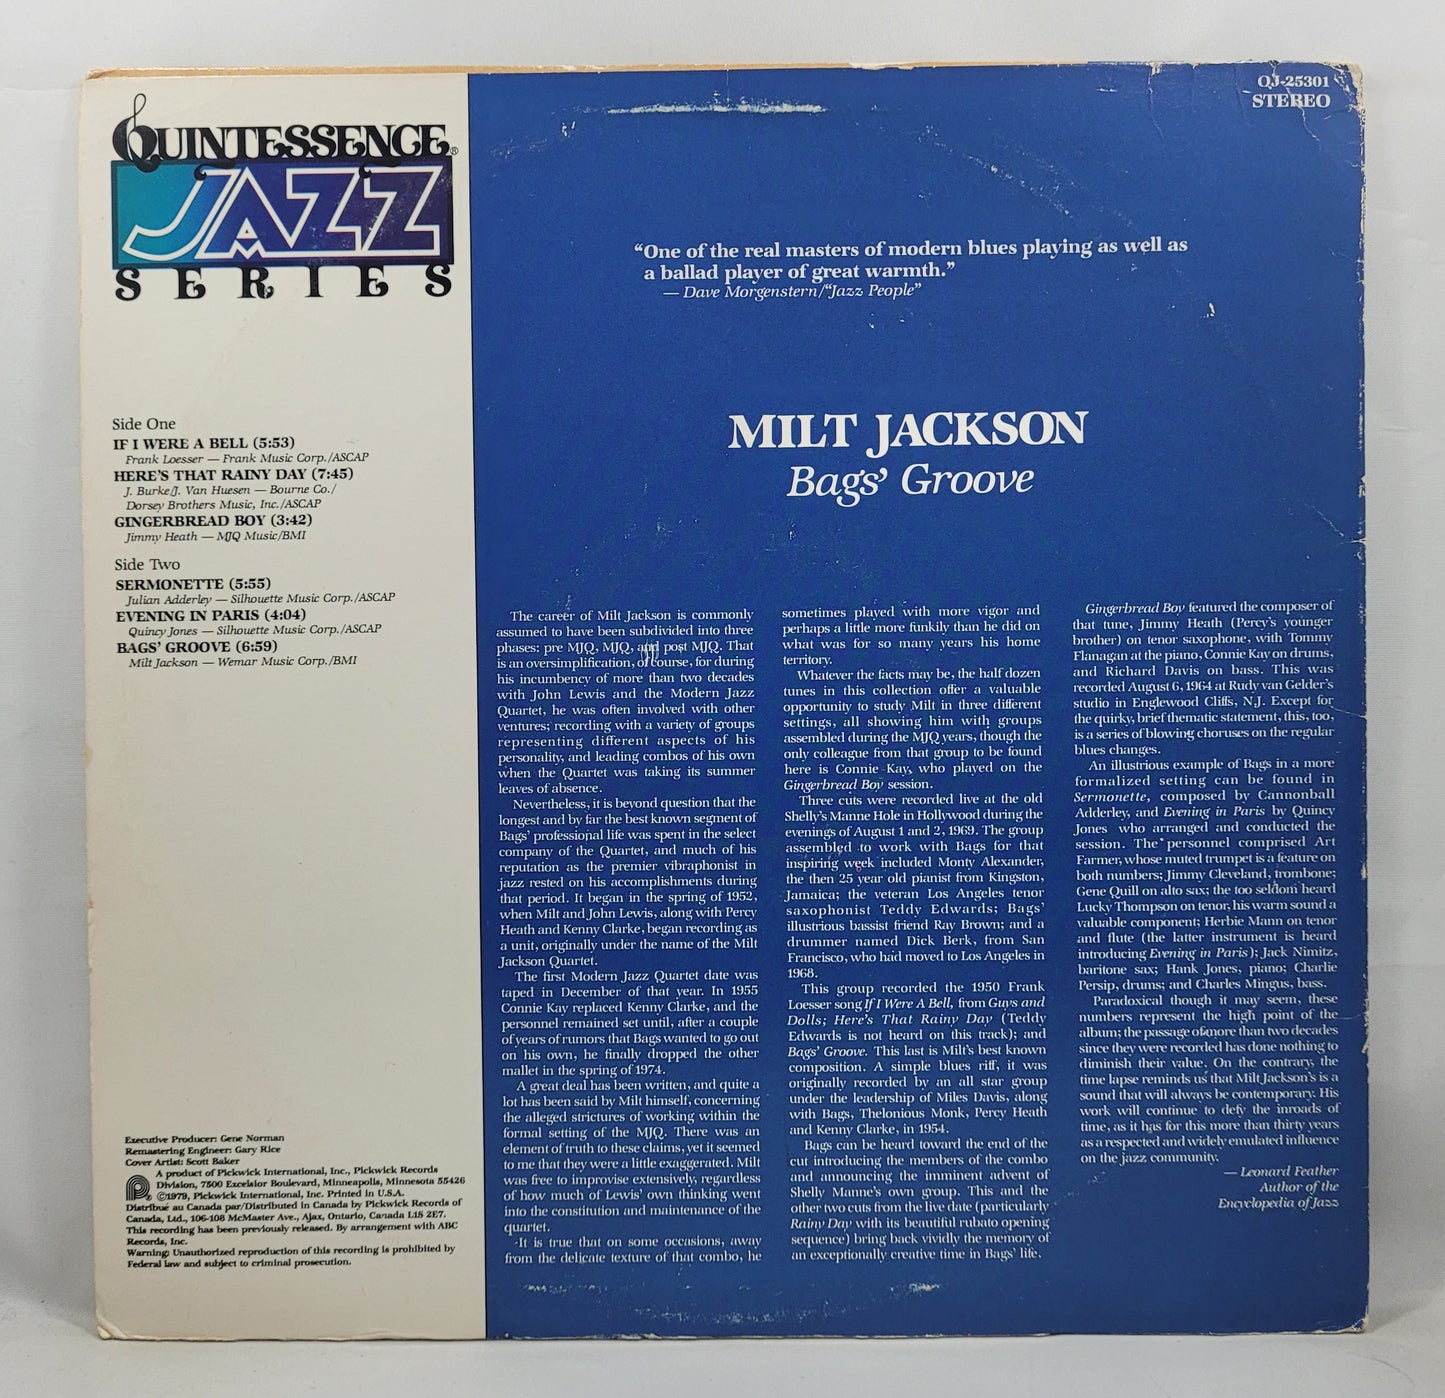 Milt Jackson - Bags' Groove [1979 Compilation] [Used Vinyl Record LP]